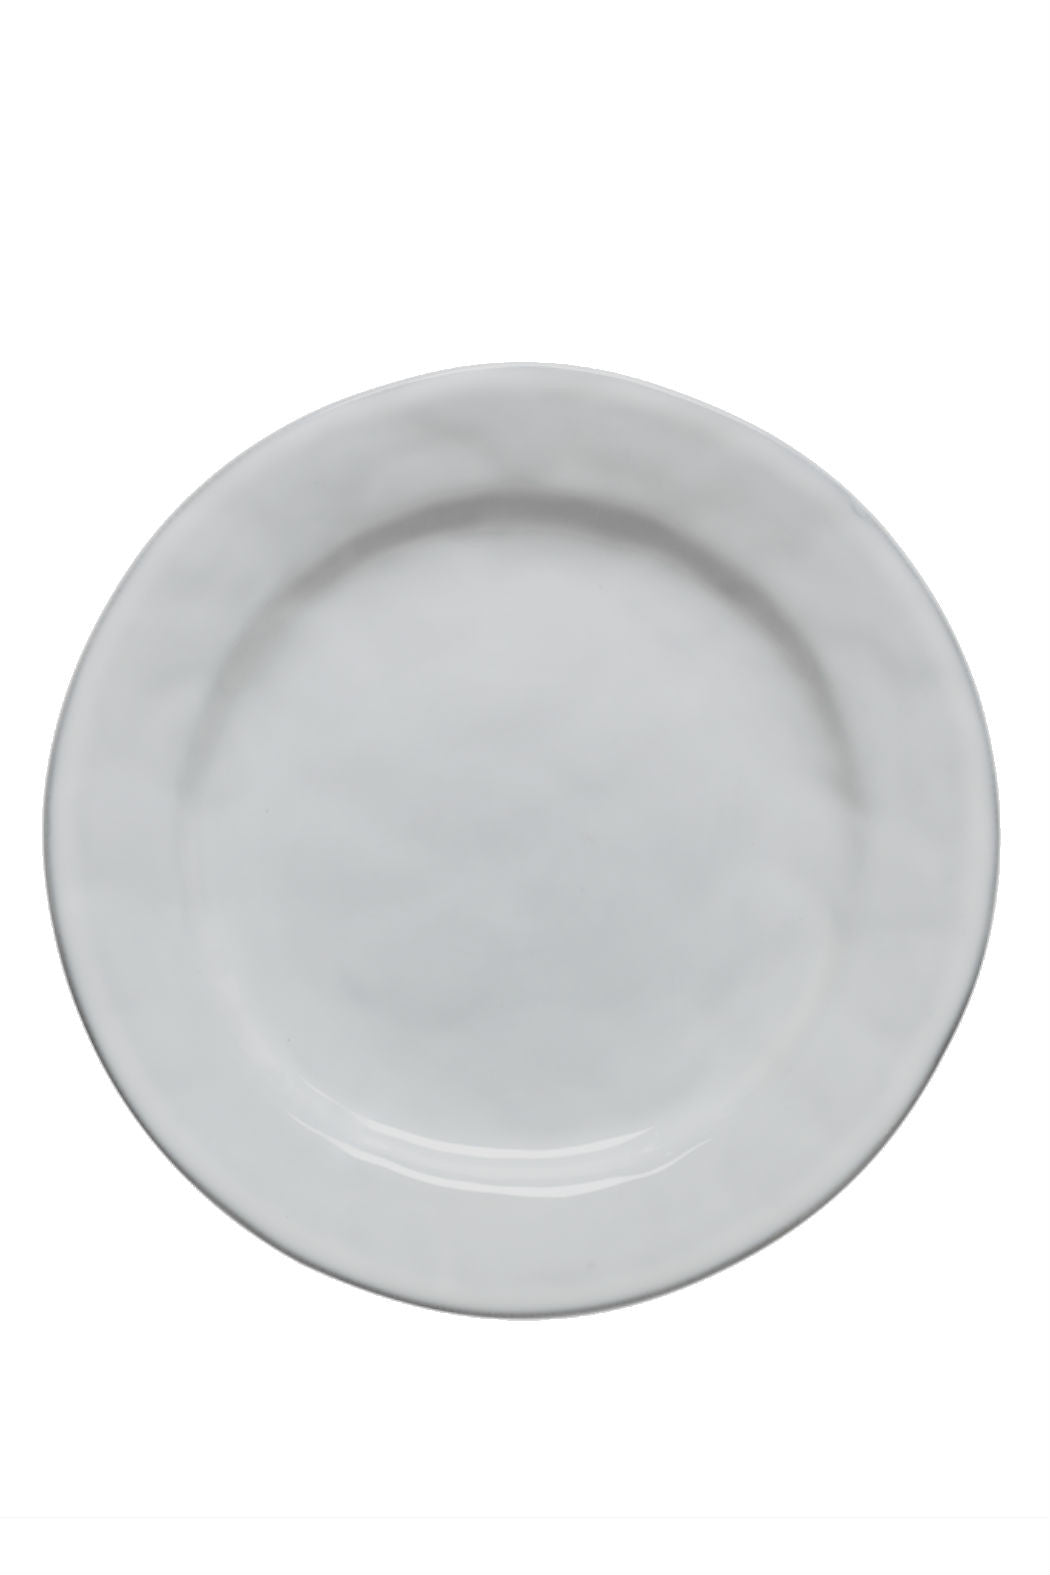 Juliska Quotidien White Truffle Dinner Plate - New Orientation
